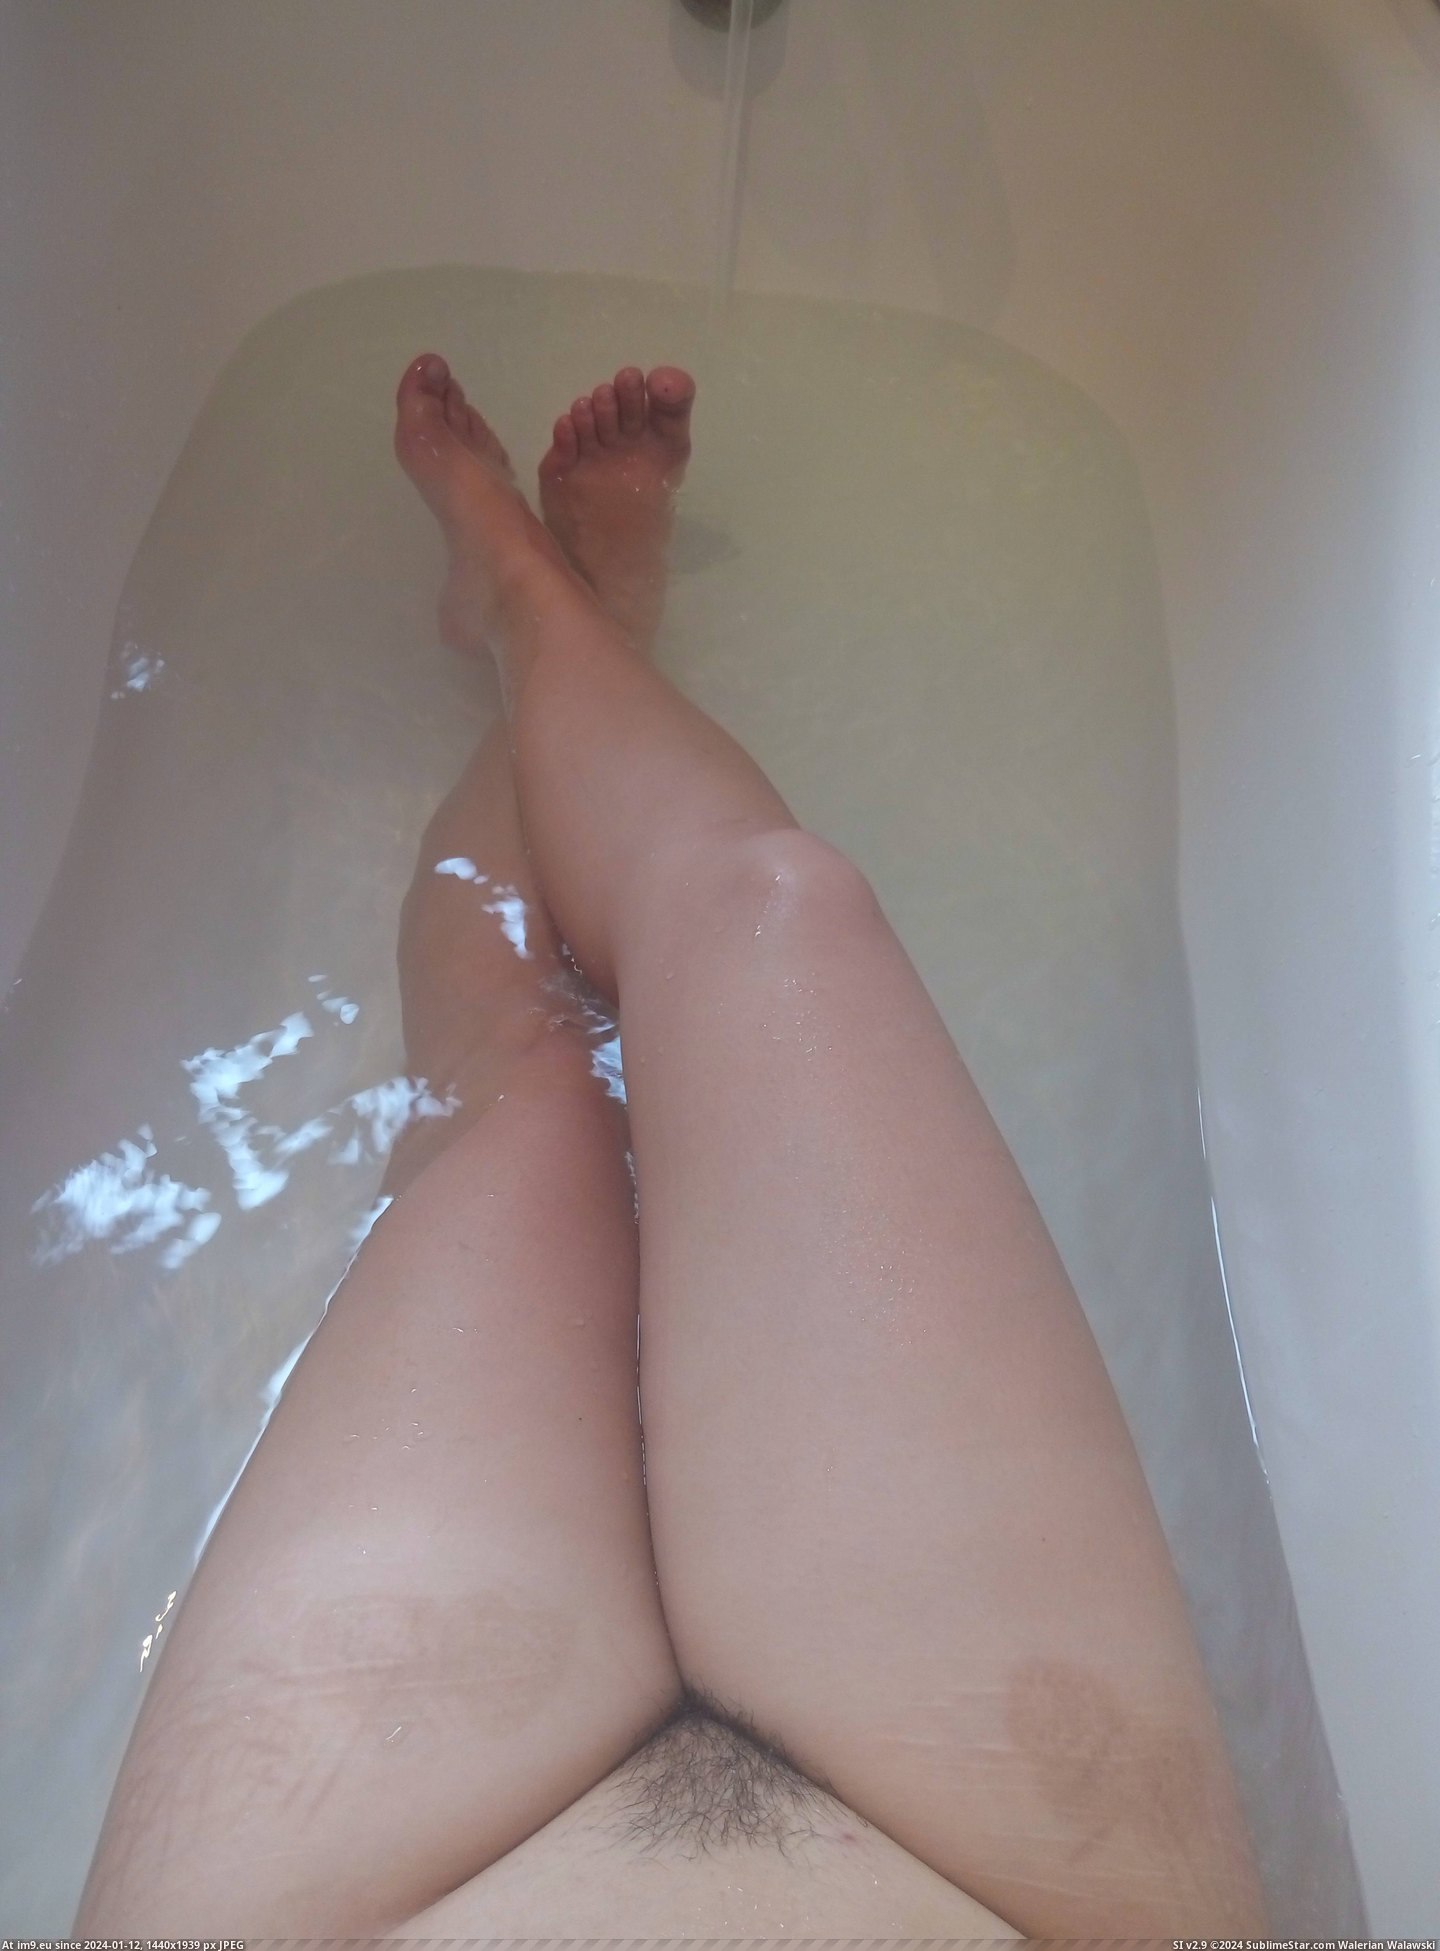 #Nsfw #Legs #Silky #Bath #Soft [Nsfw] My legs are especially soft and silky after a bath Pic. (Изображение из альбом My r/NSFW favs))